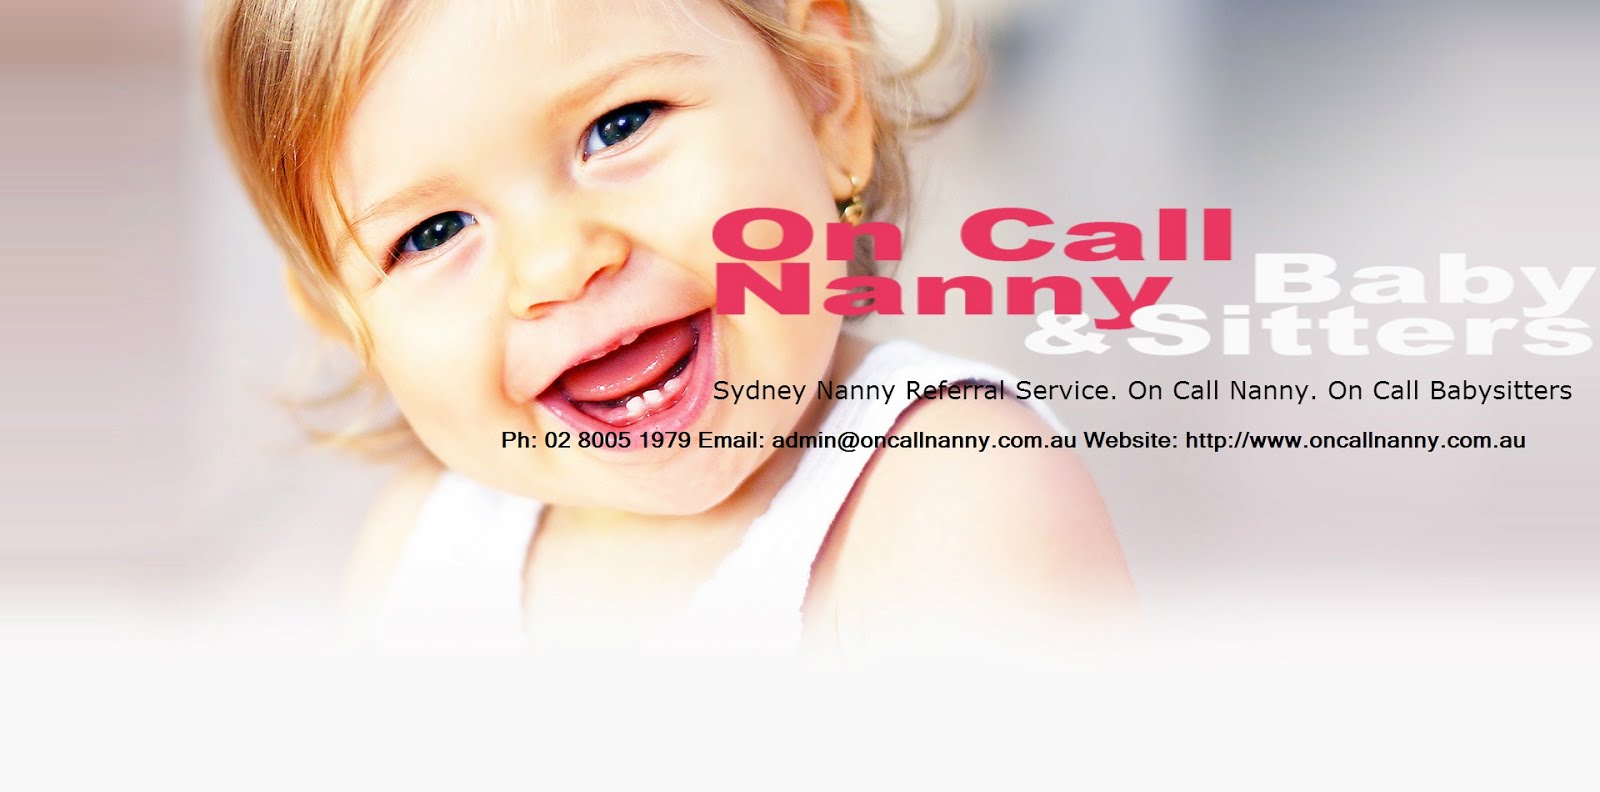 Sydney Nanny Referral Service On Call Nanny.On Call Babysitters